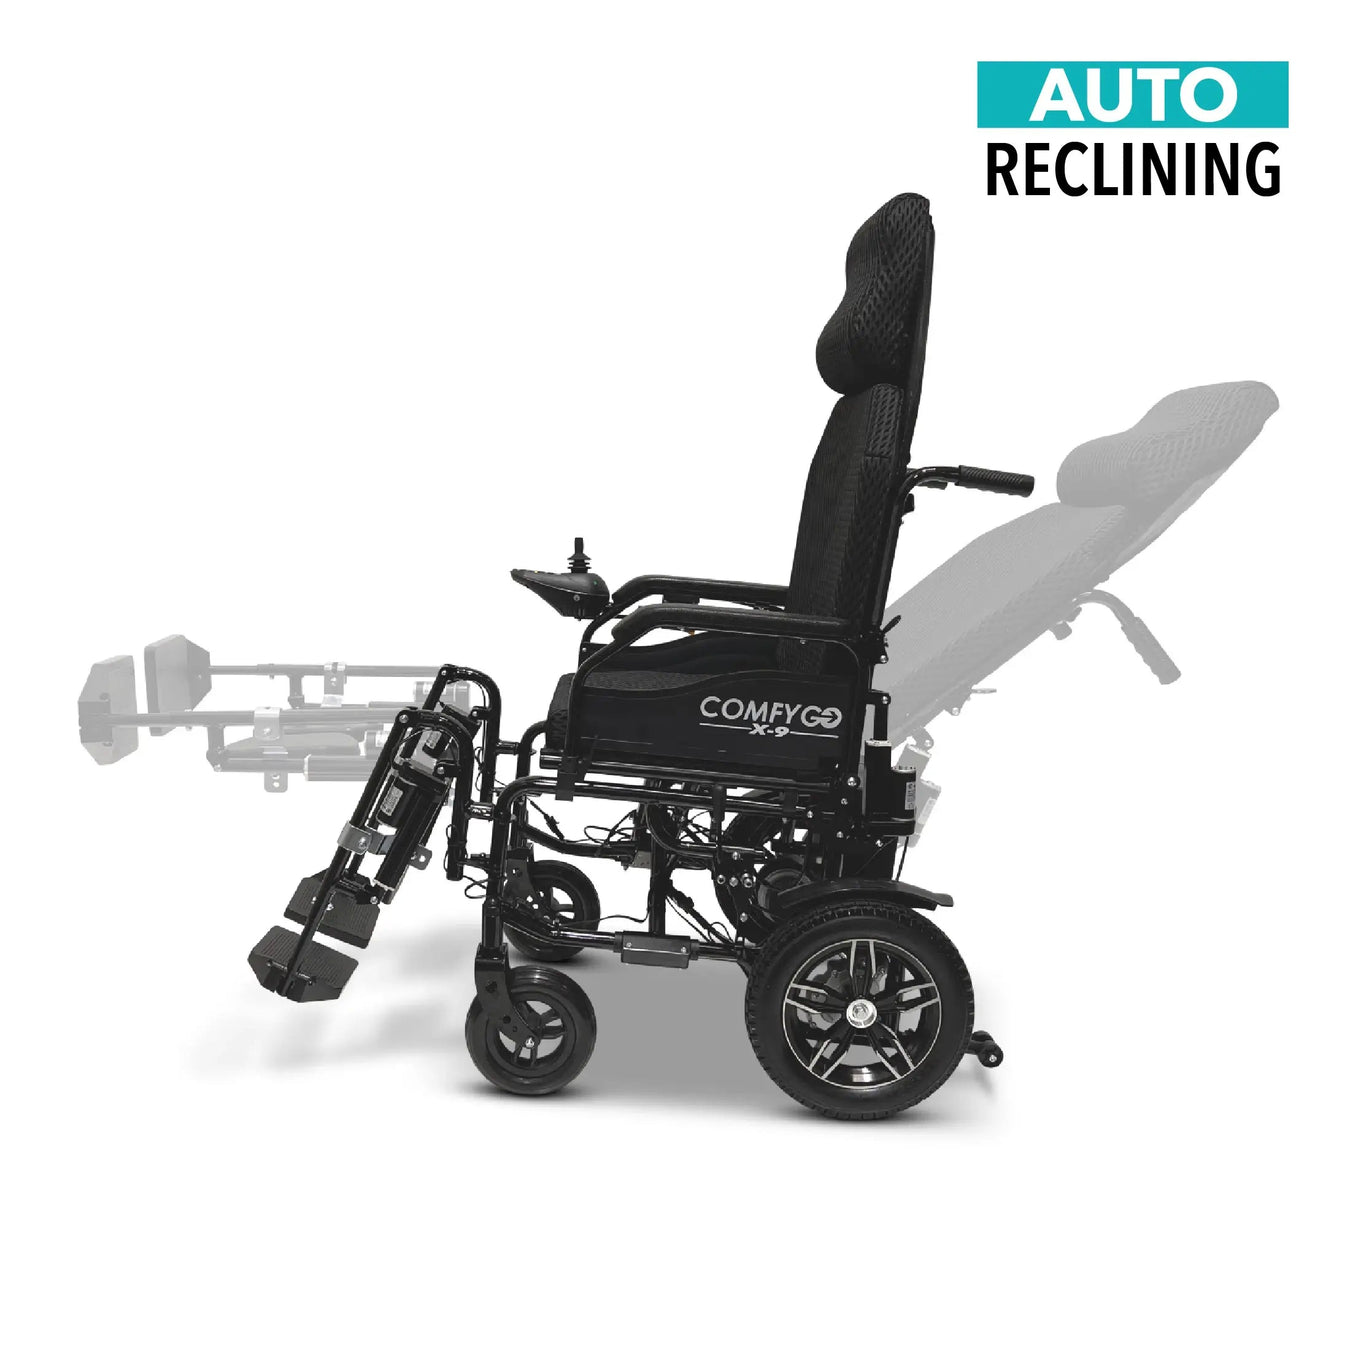 Bariatric Power Wheelchairs